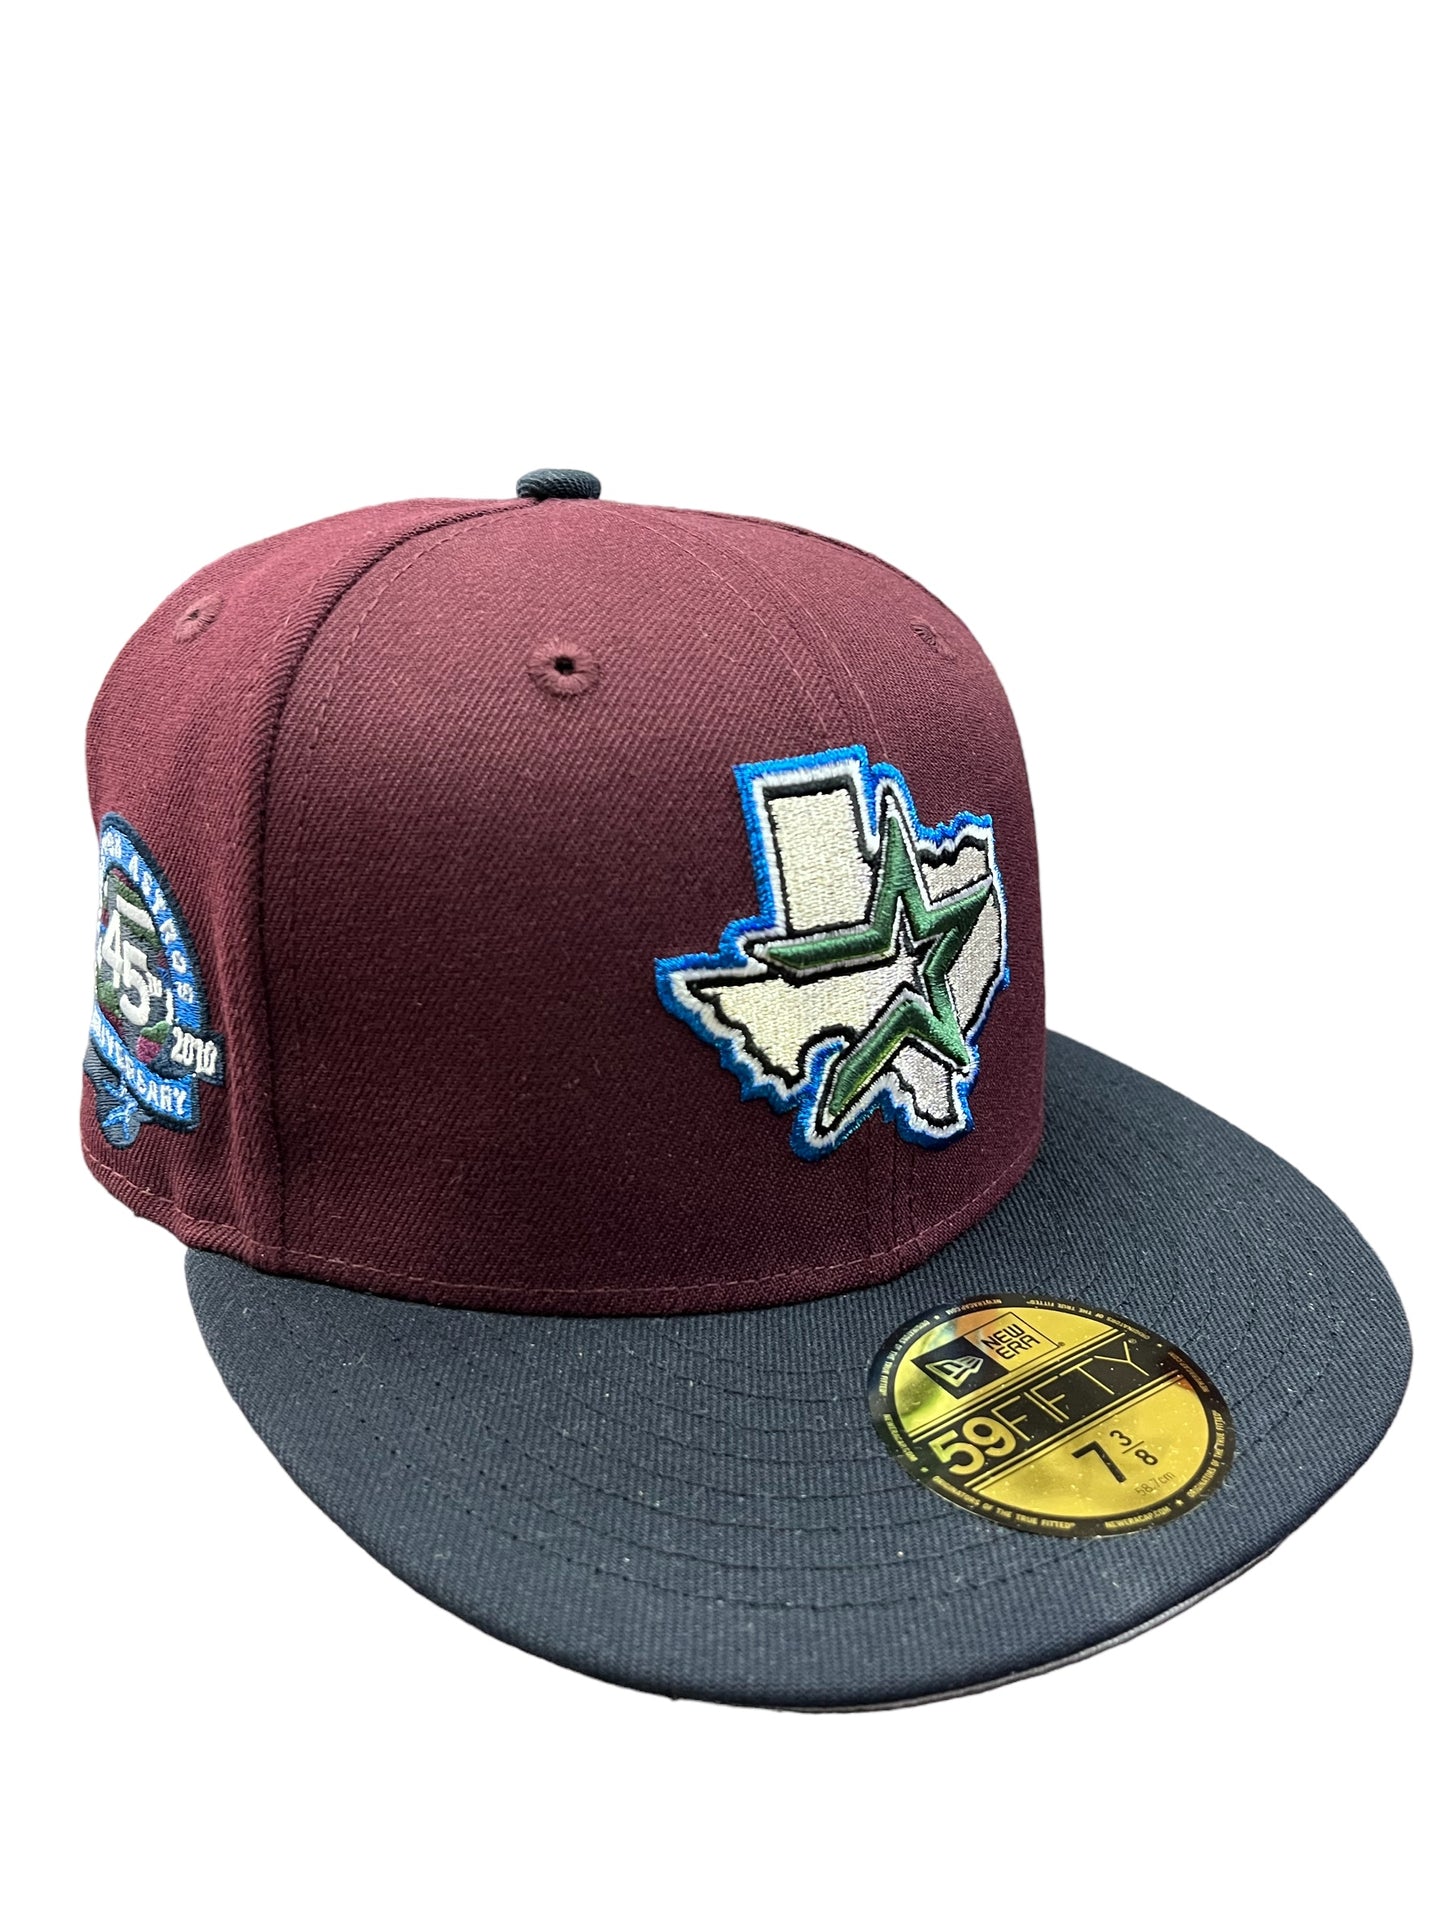 Houston Astros “Maroon / Navy” Hat